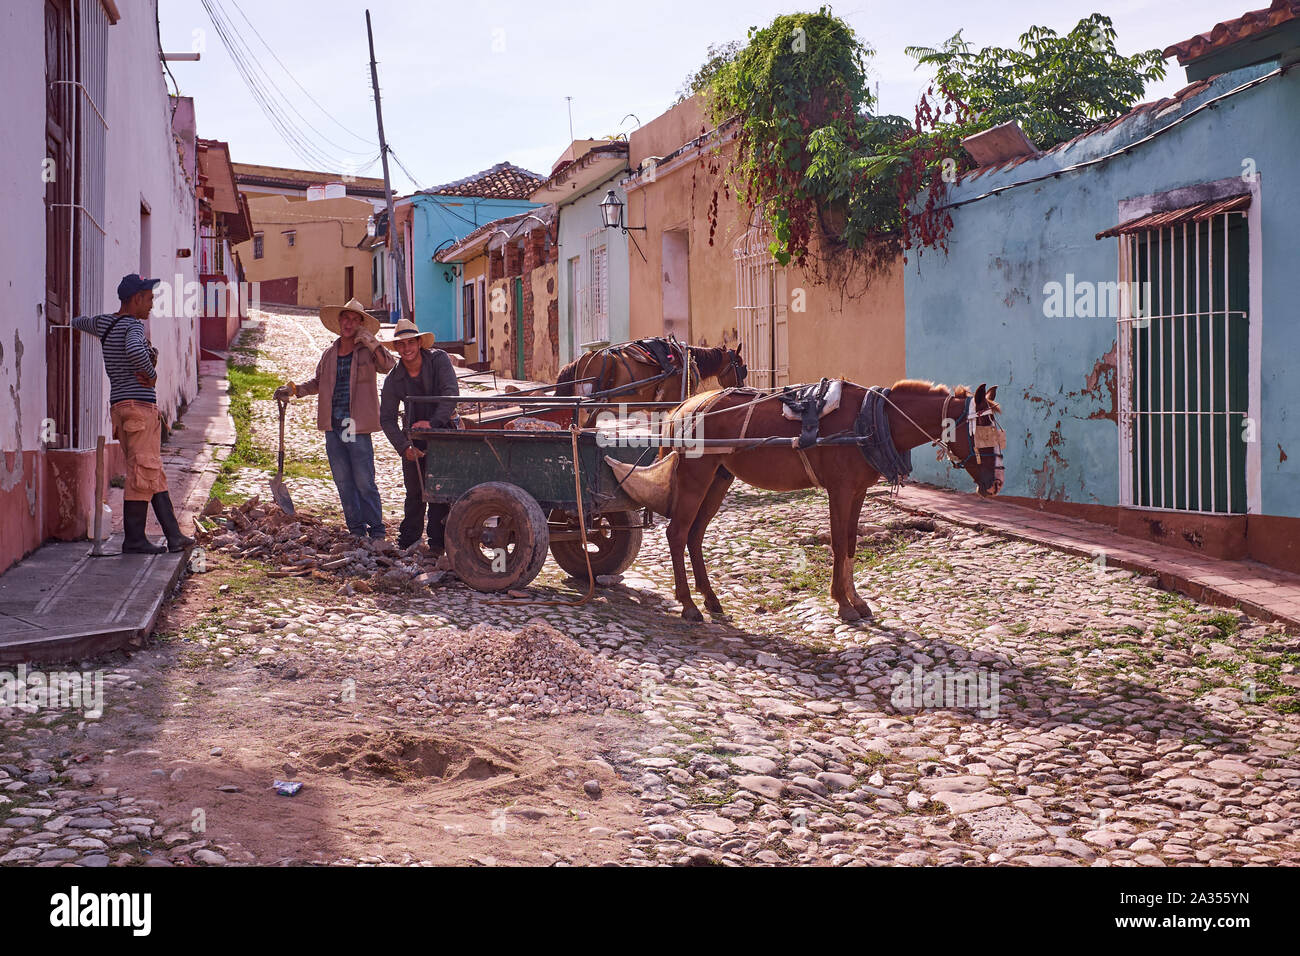 A Workhorse and workmen repair cobblestone streets in Trinidad, Cuba Stock Photo